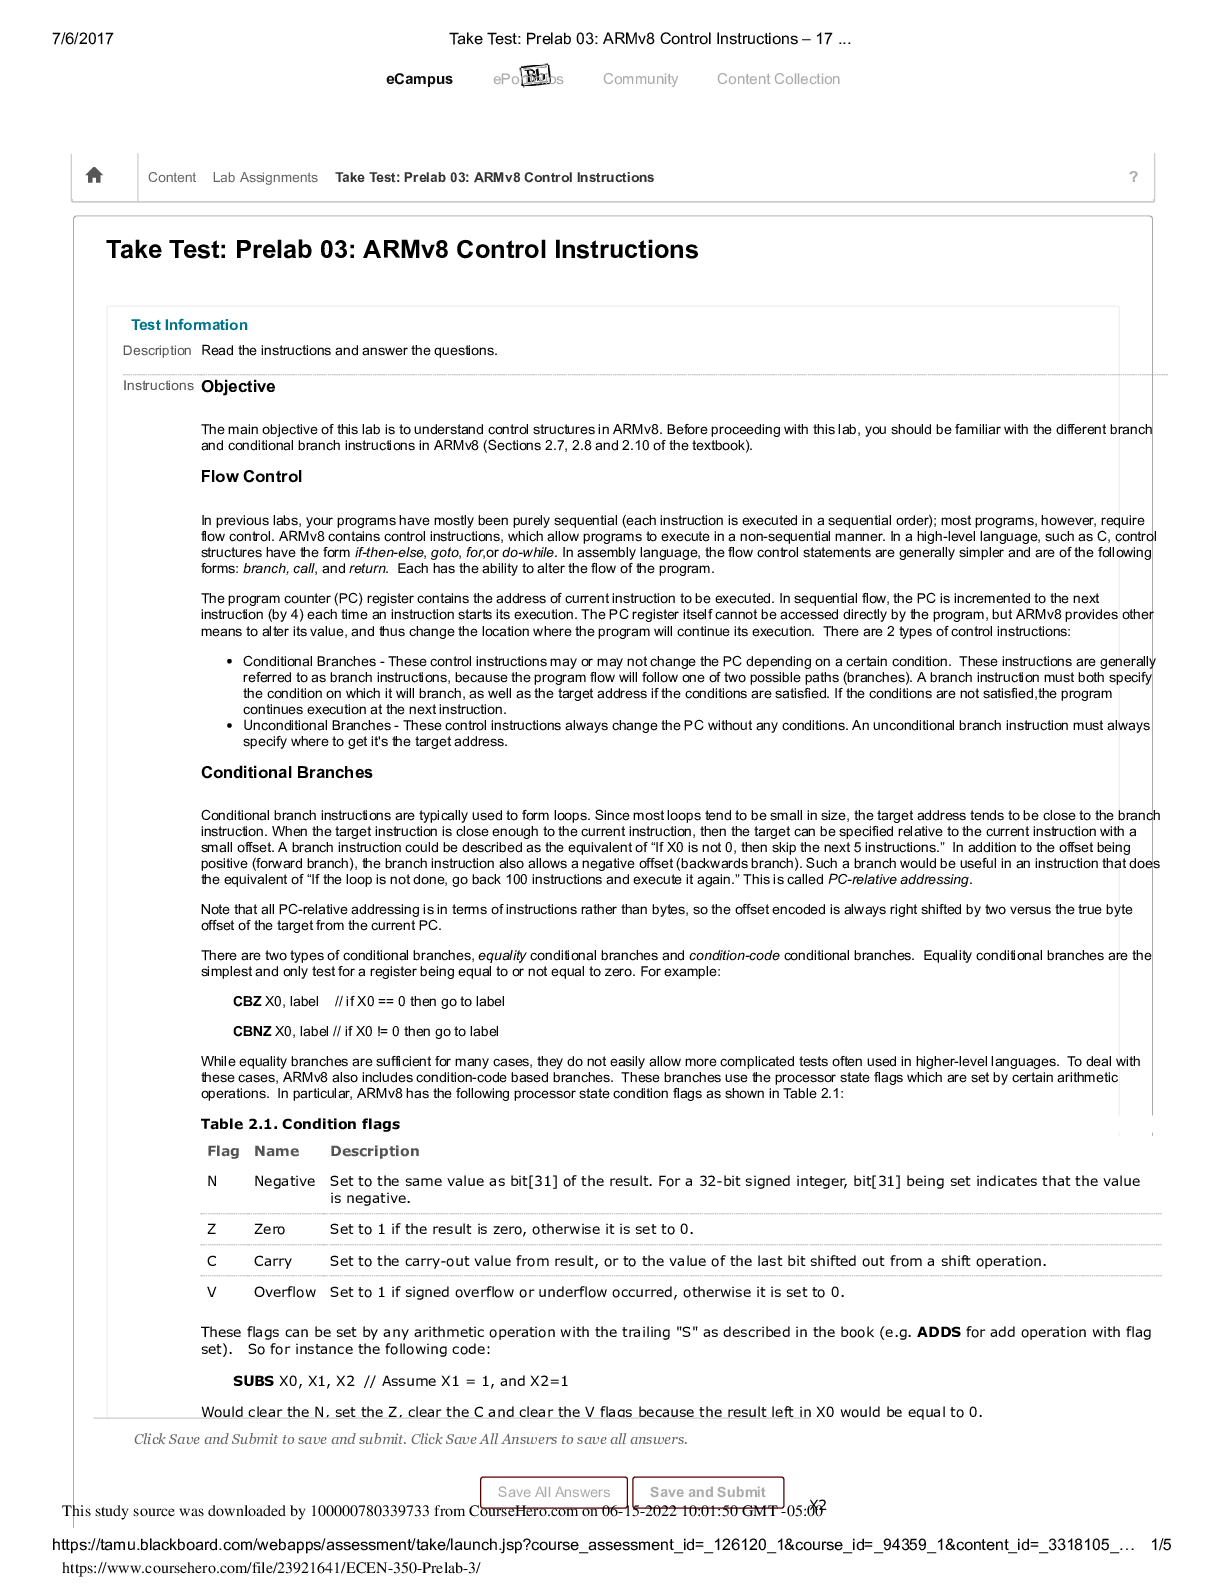 Prelab 03  ARMv8 Control Instructions 17 Take Test